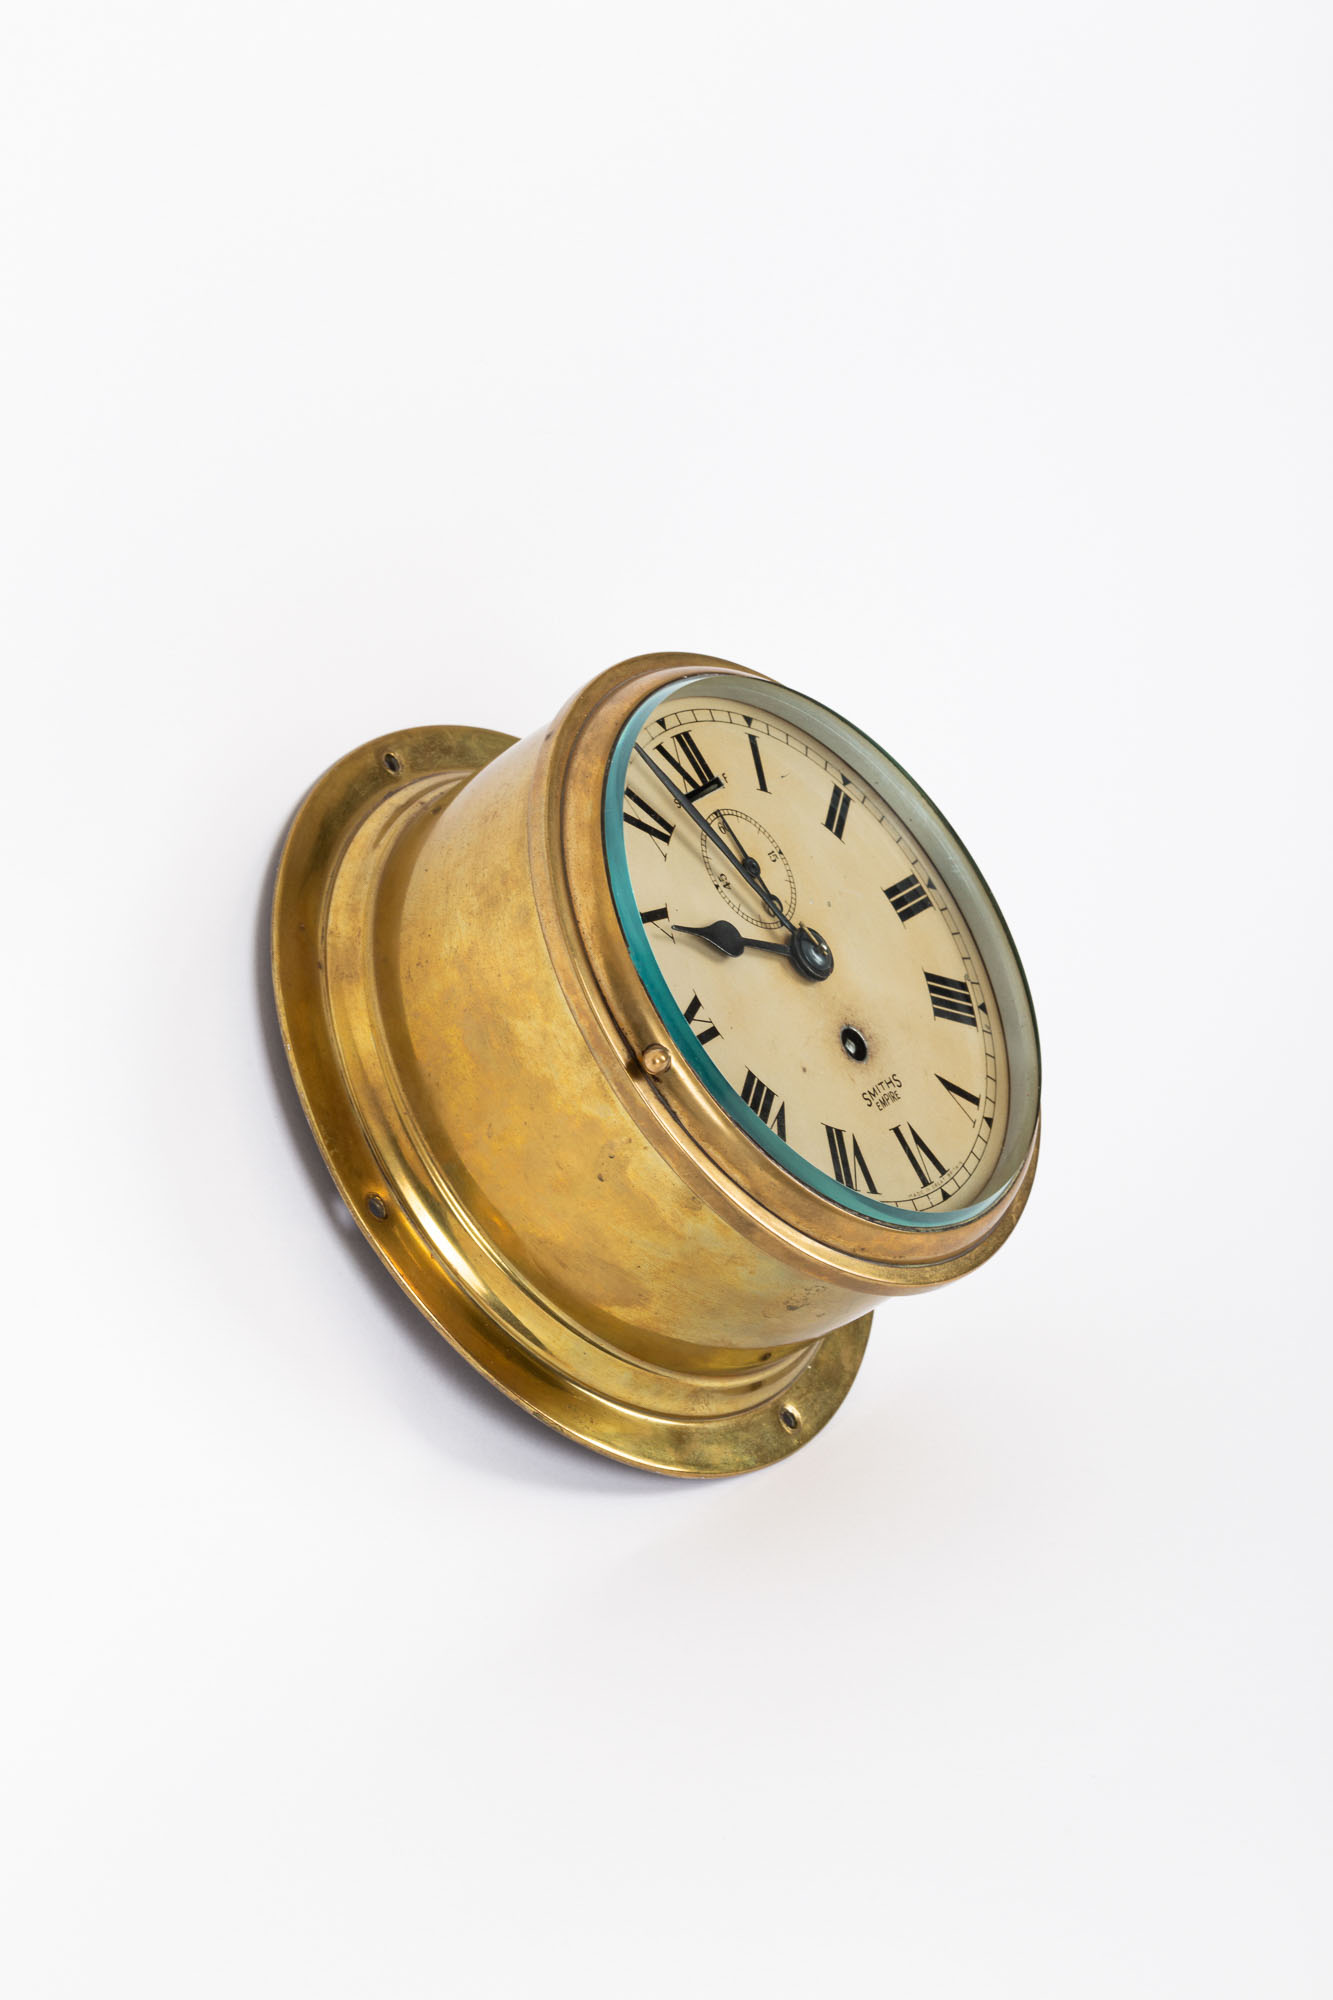 Smith's Empire Bulkhead Ship's Clock